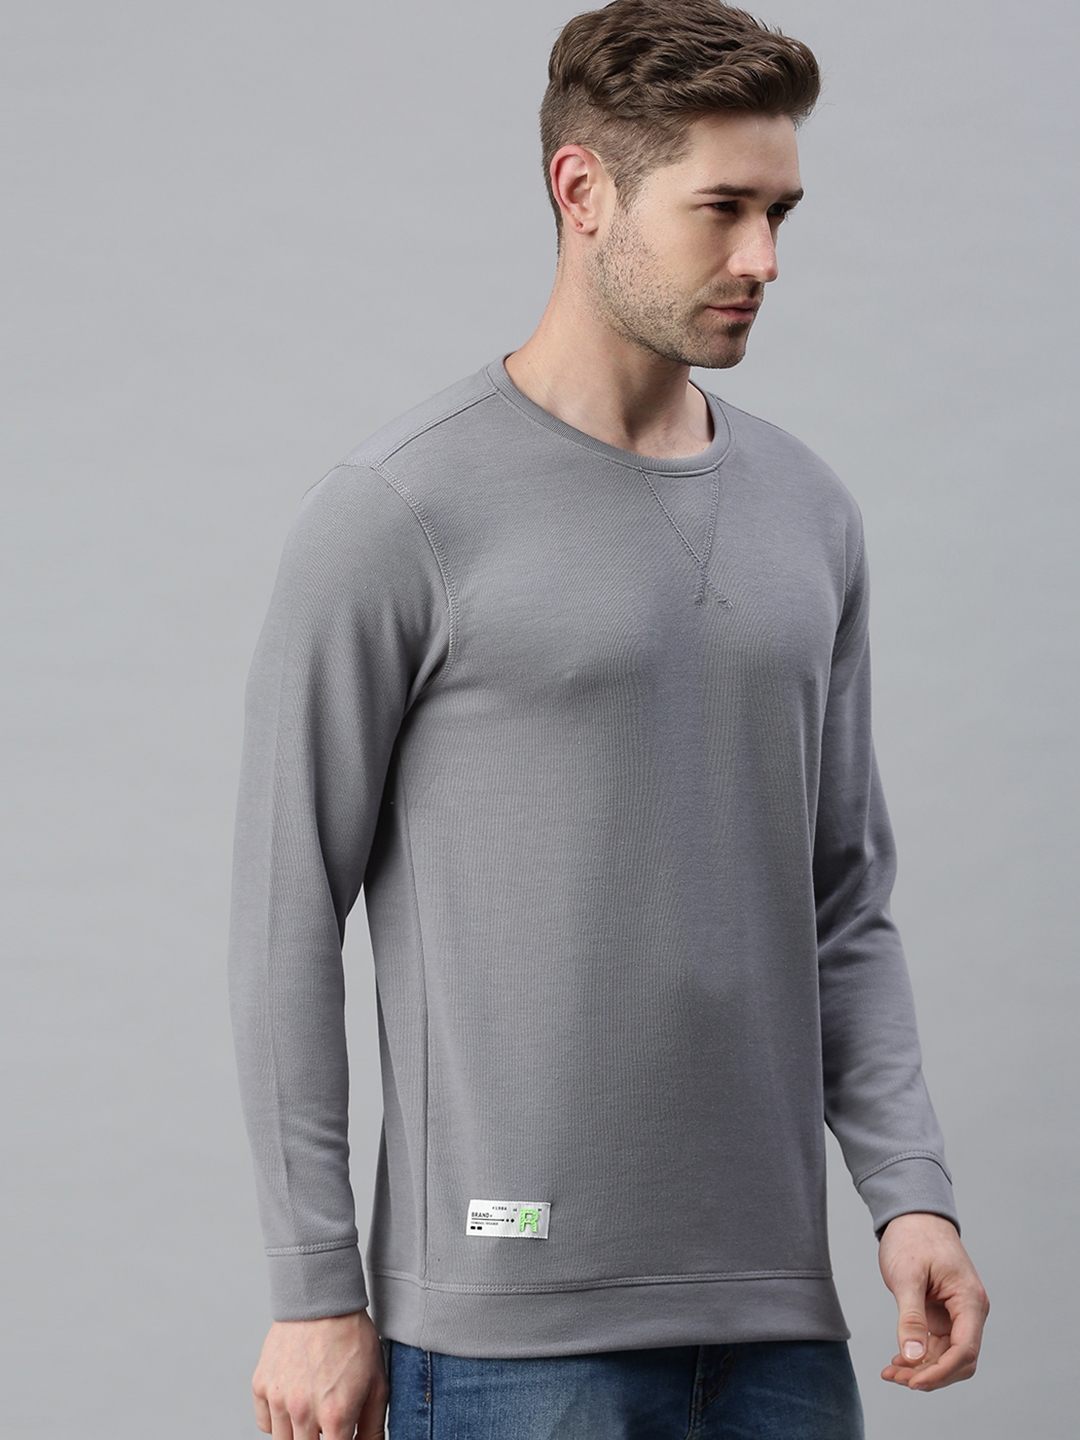 Men's Grey Cotton Blend Solid Sweatshirts